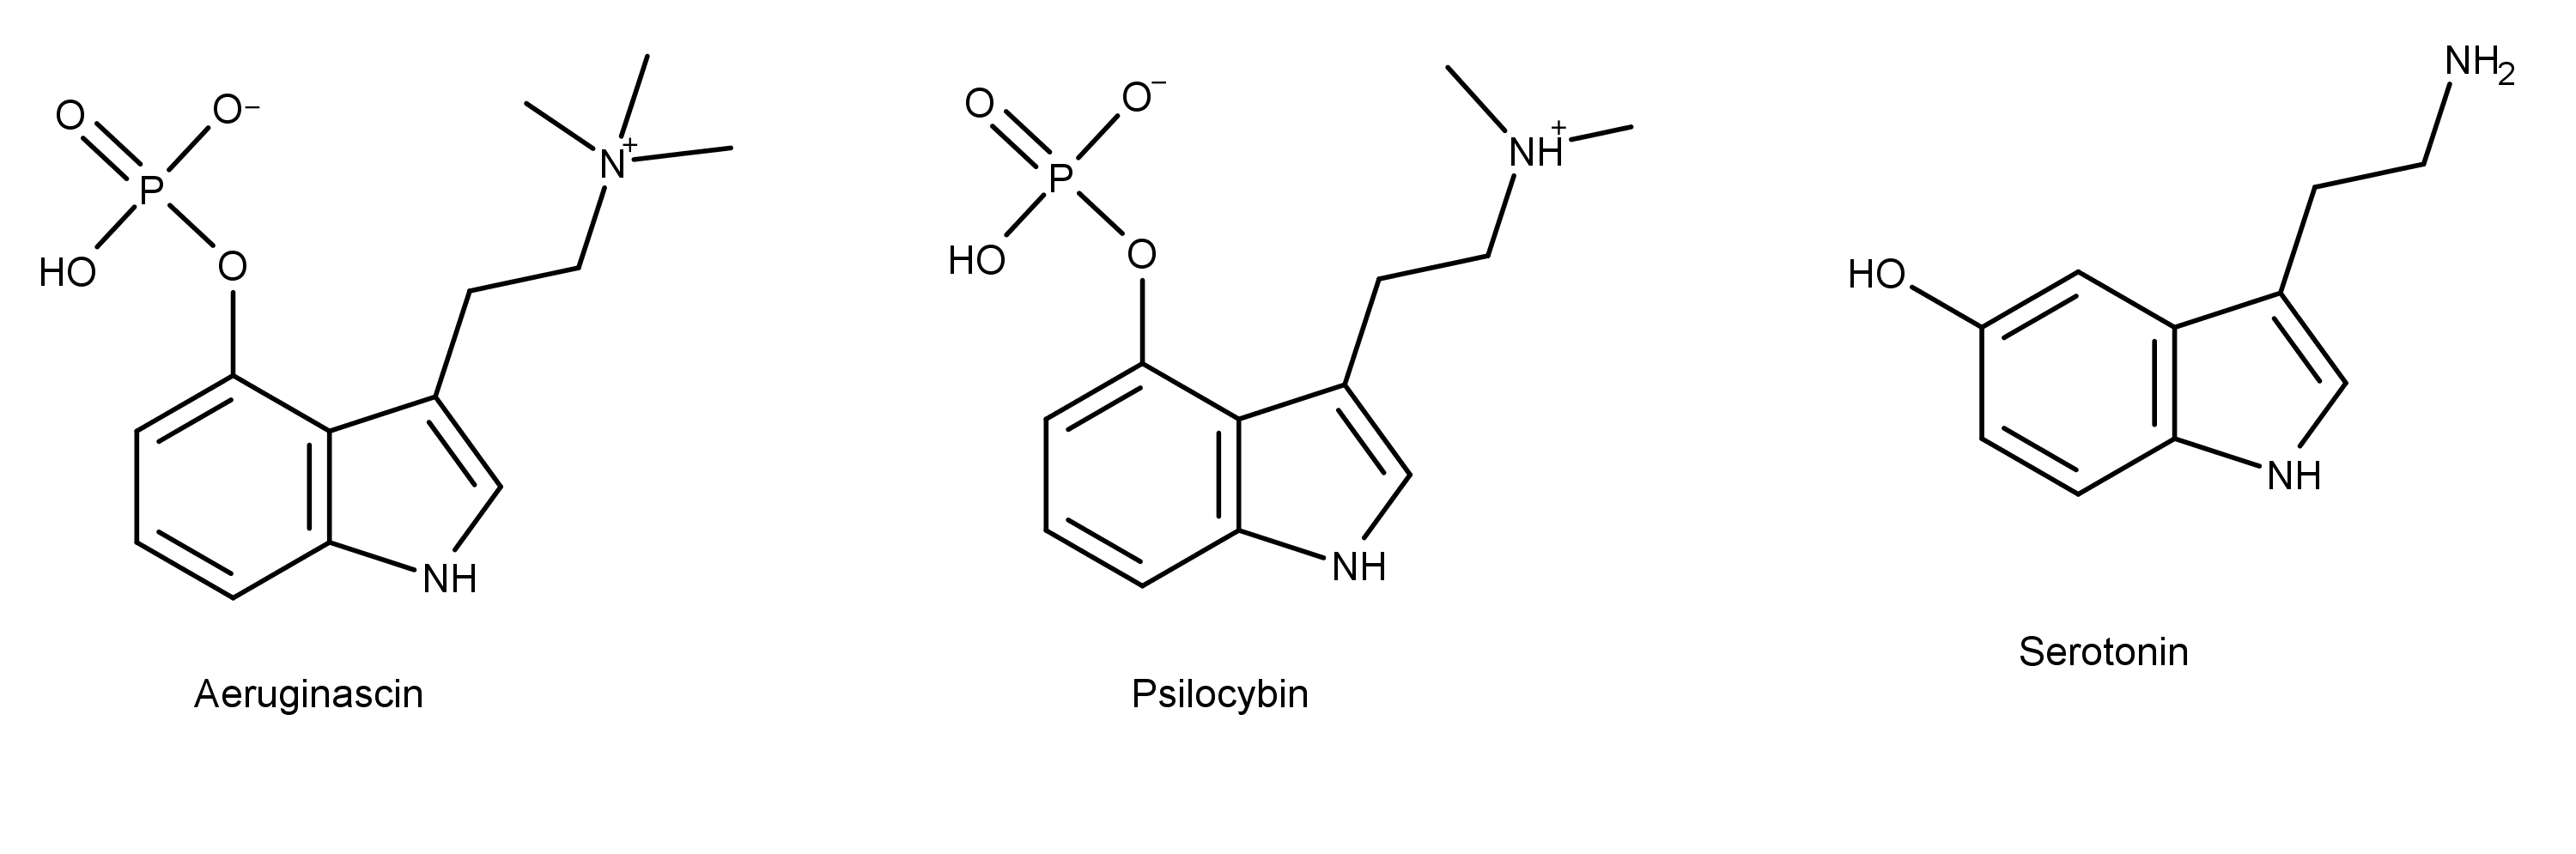 aeruginascin, psilocybin, and serotonin